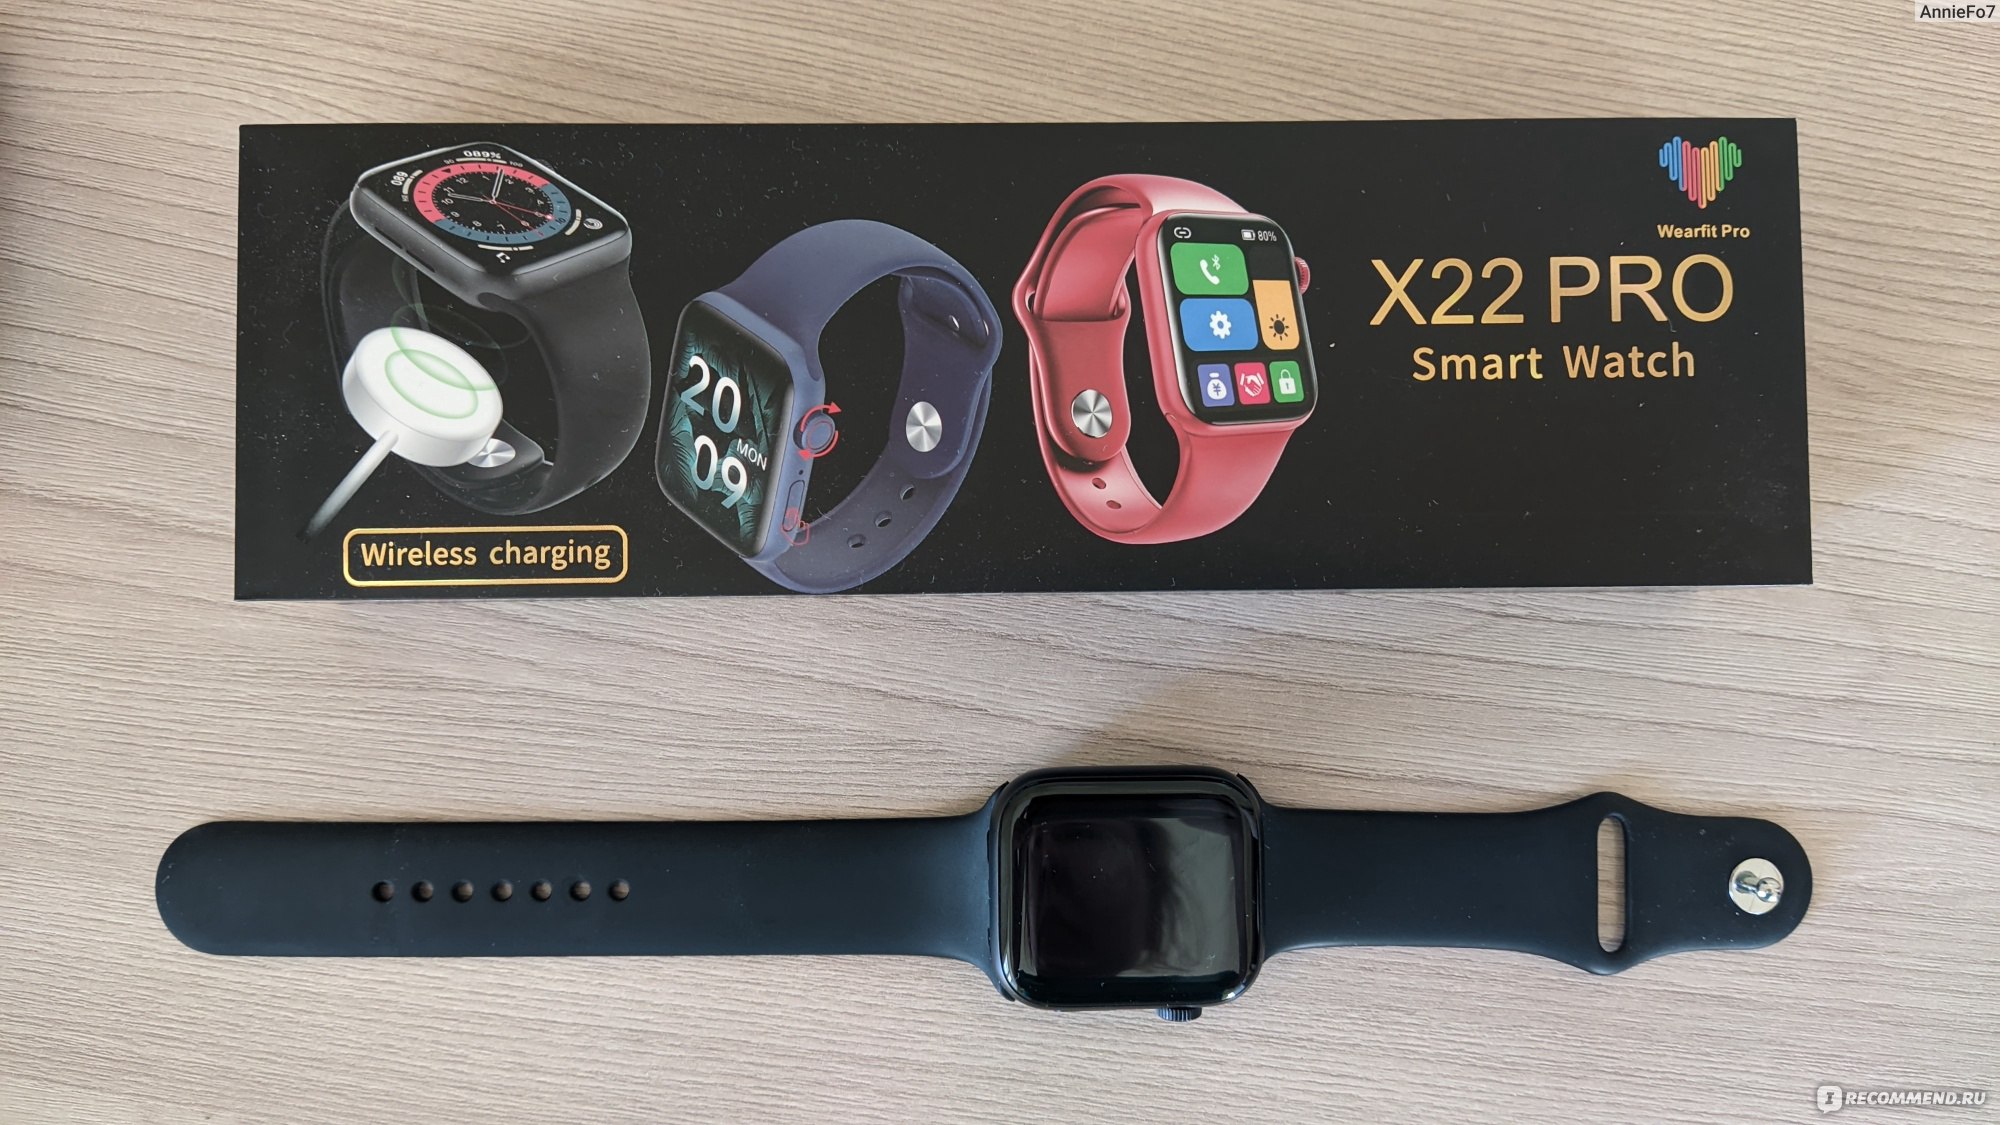 6x pro часы. Смарт часы x22 Pro. Смарт часы Wearfit Pro x22. Smart watch x22 Pro Max. Часы x22 Pro NFC.